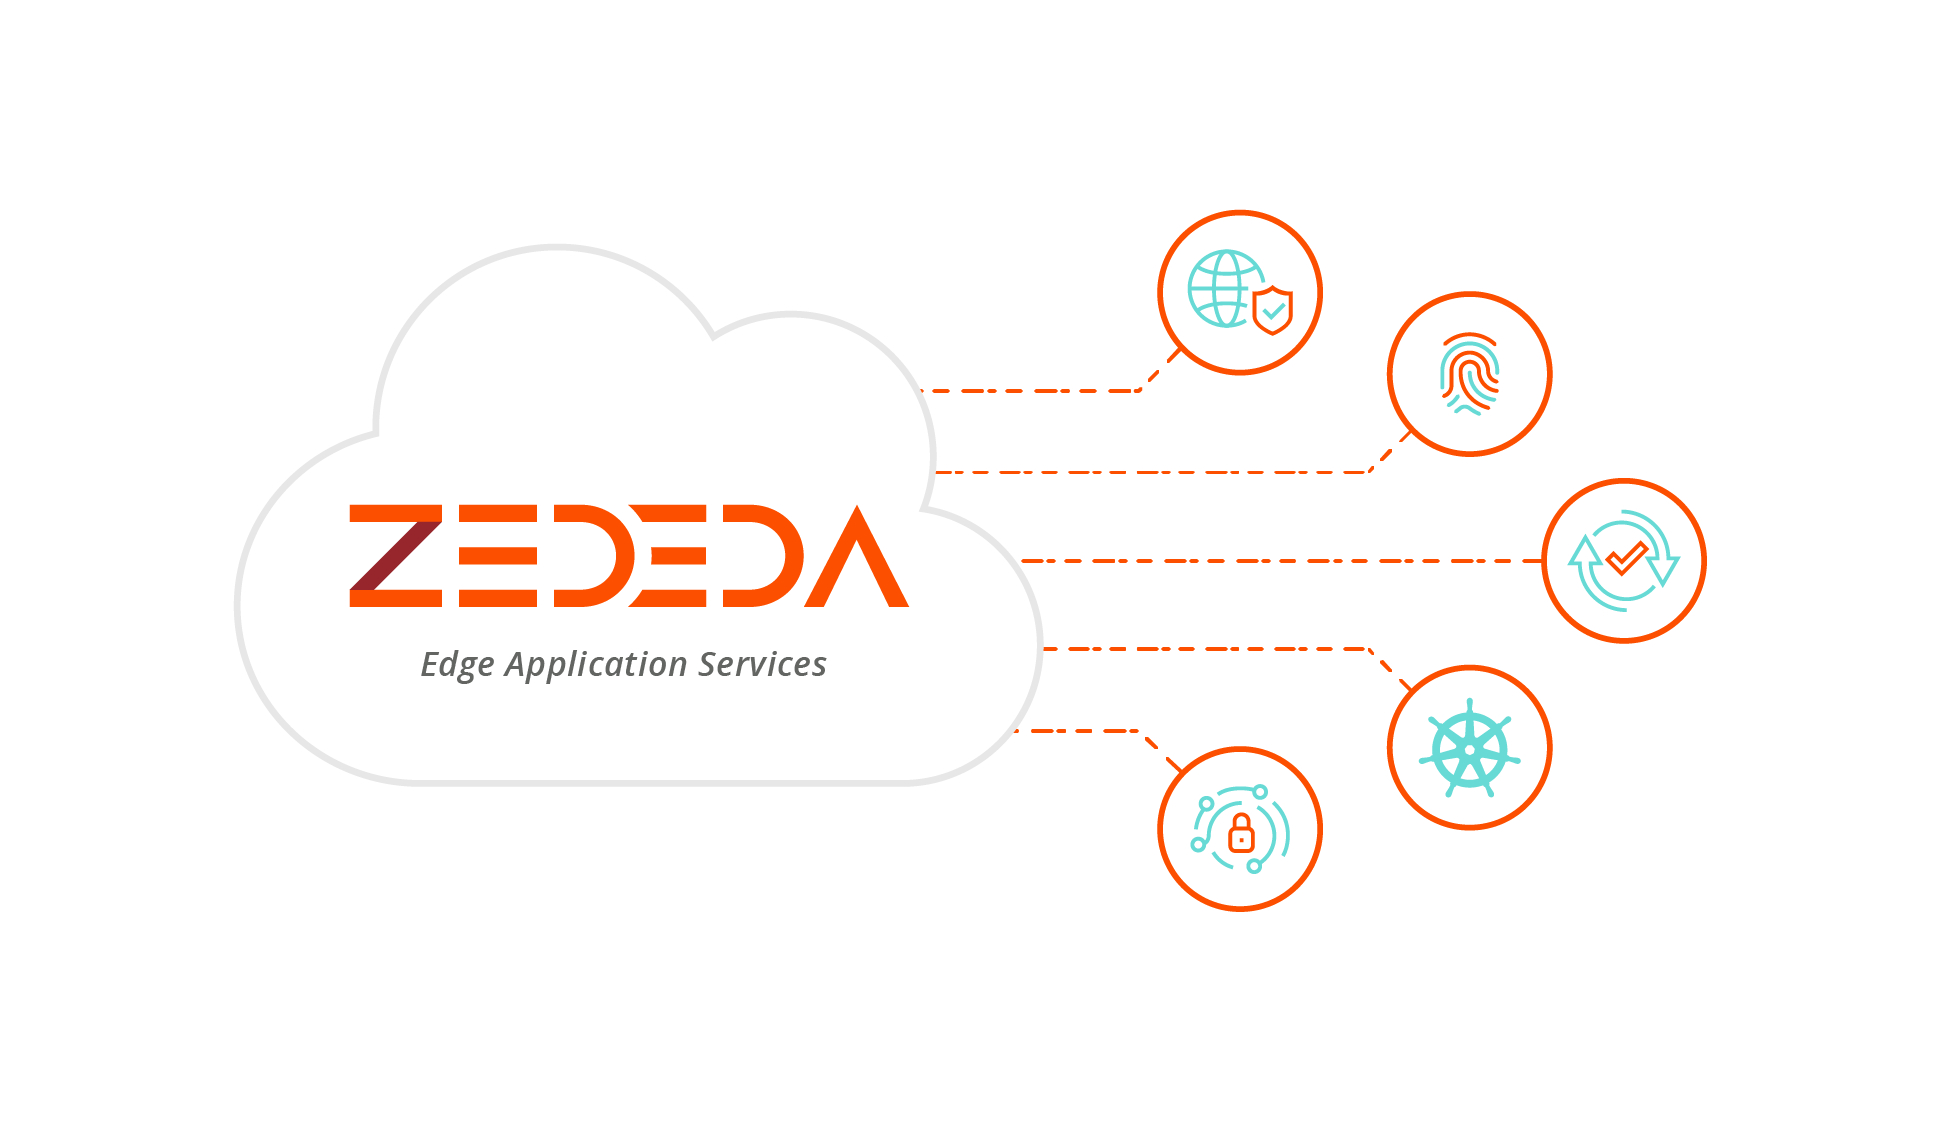 Startup Zededa Raises $72 Million to Advance AI-Powered Solutions